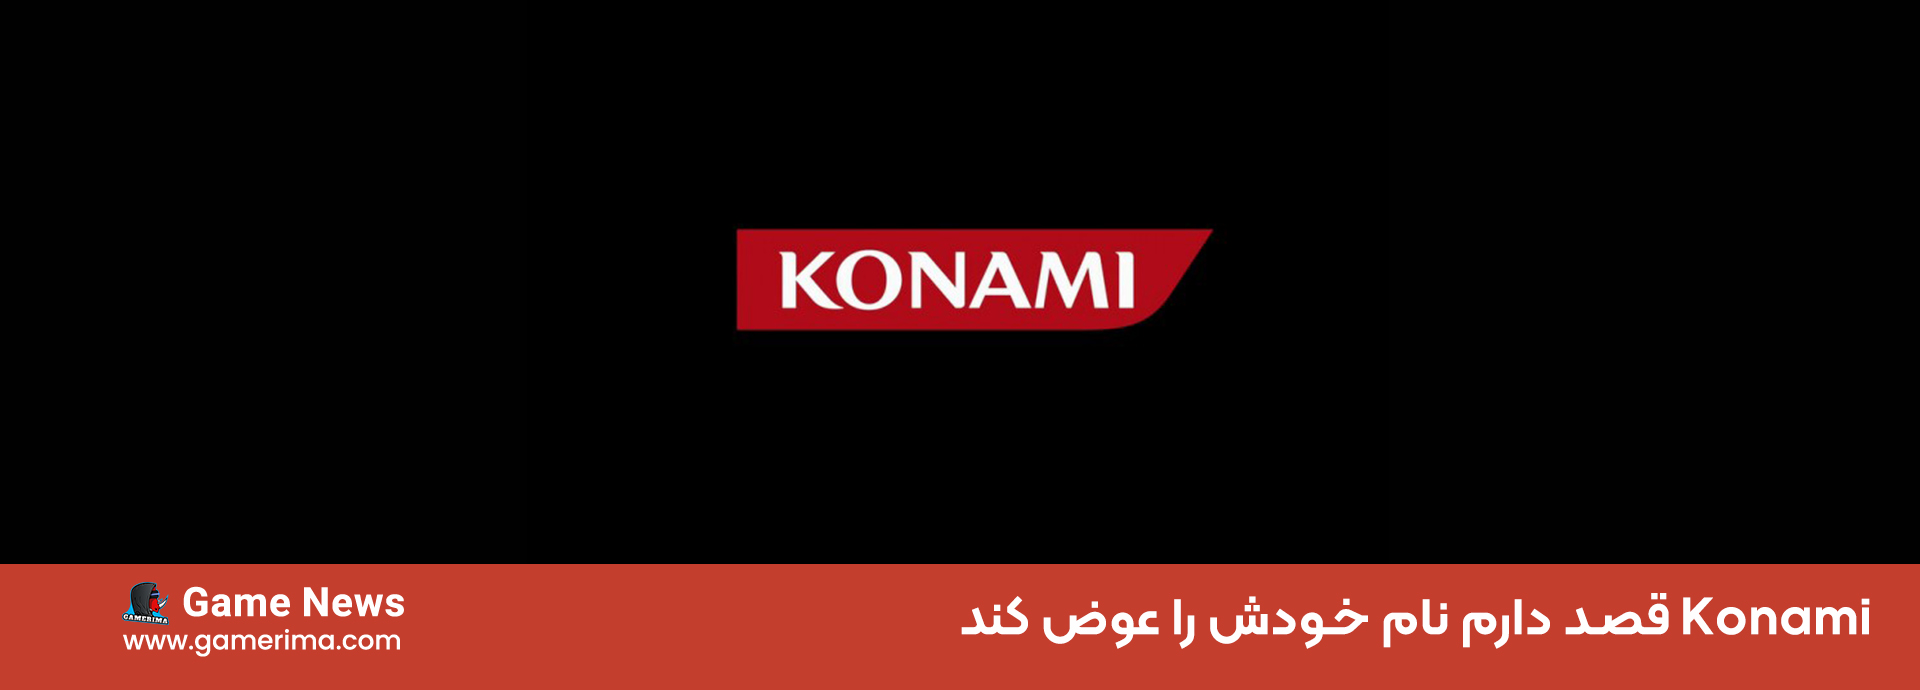 Konami wants to change it's name